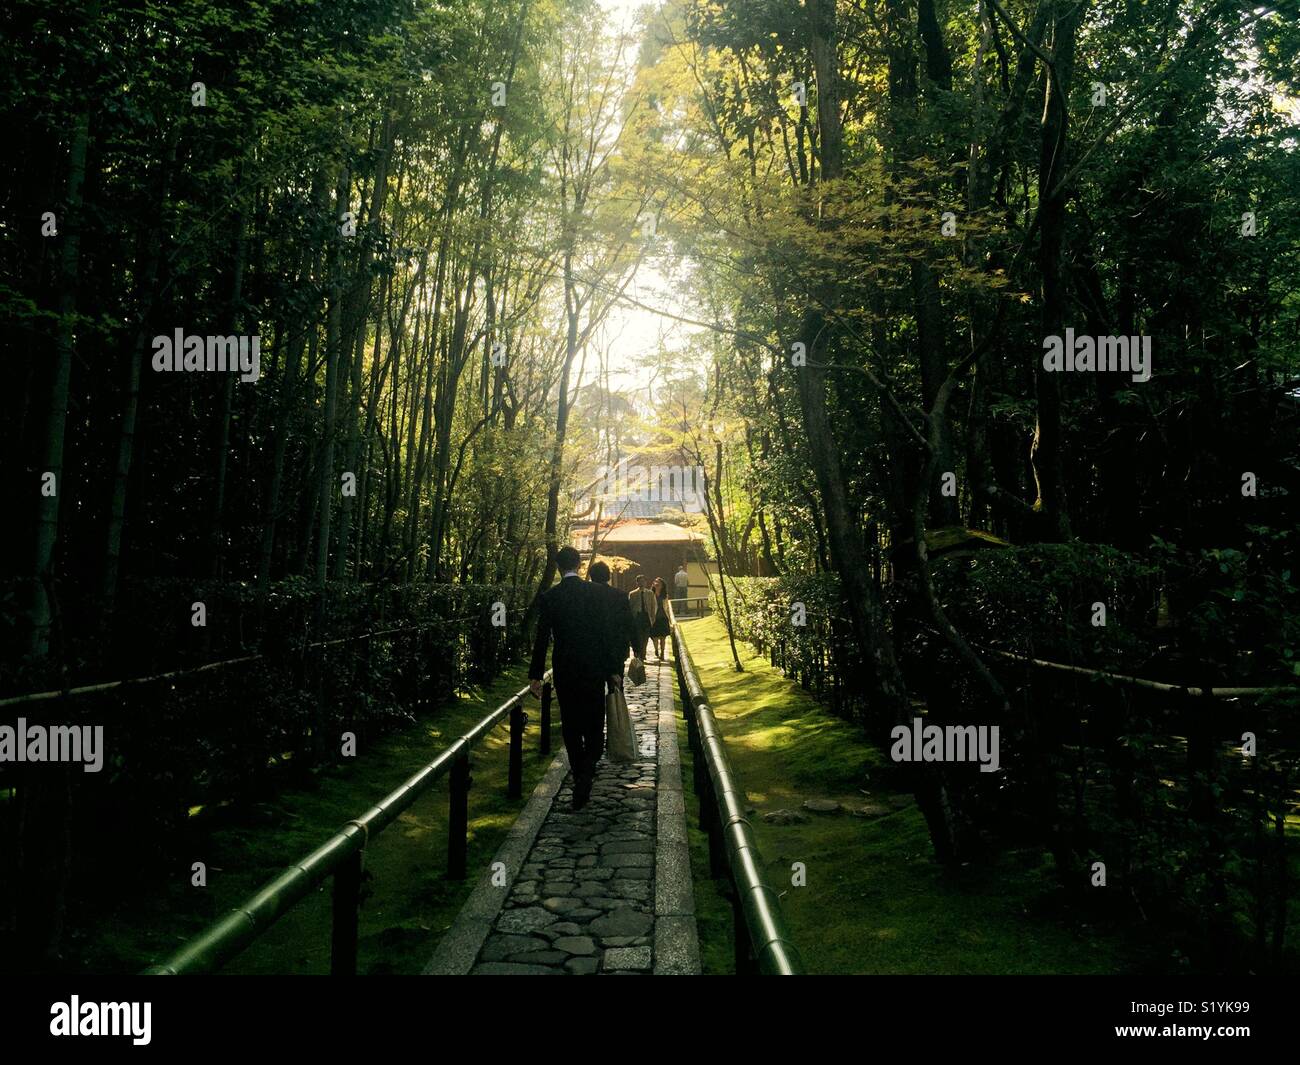 Walking through bamboo forest garden in Japan Stock Photo